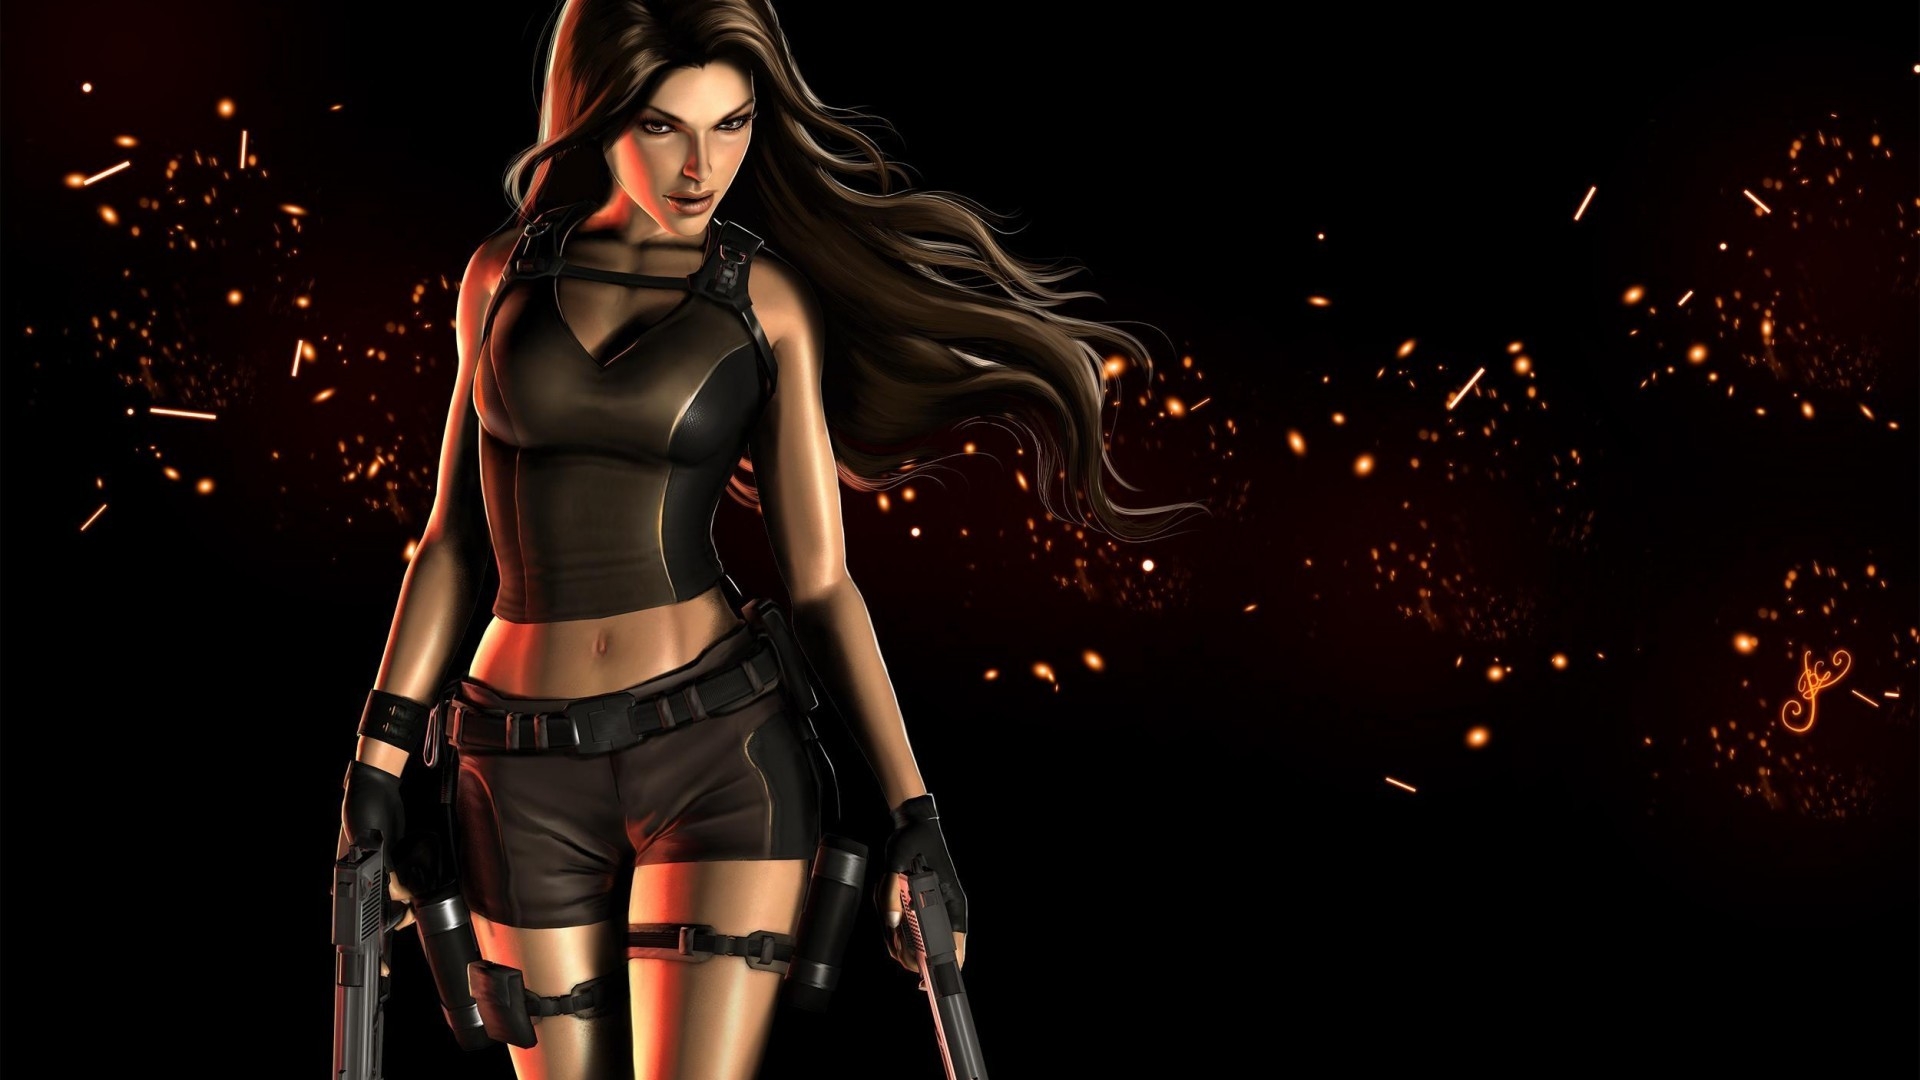 Lara Croft Tomb Raider Cool for 1920 x 1080 HDTV 1080p resolution